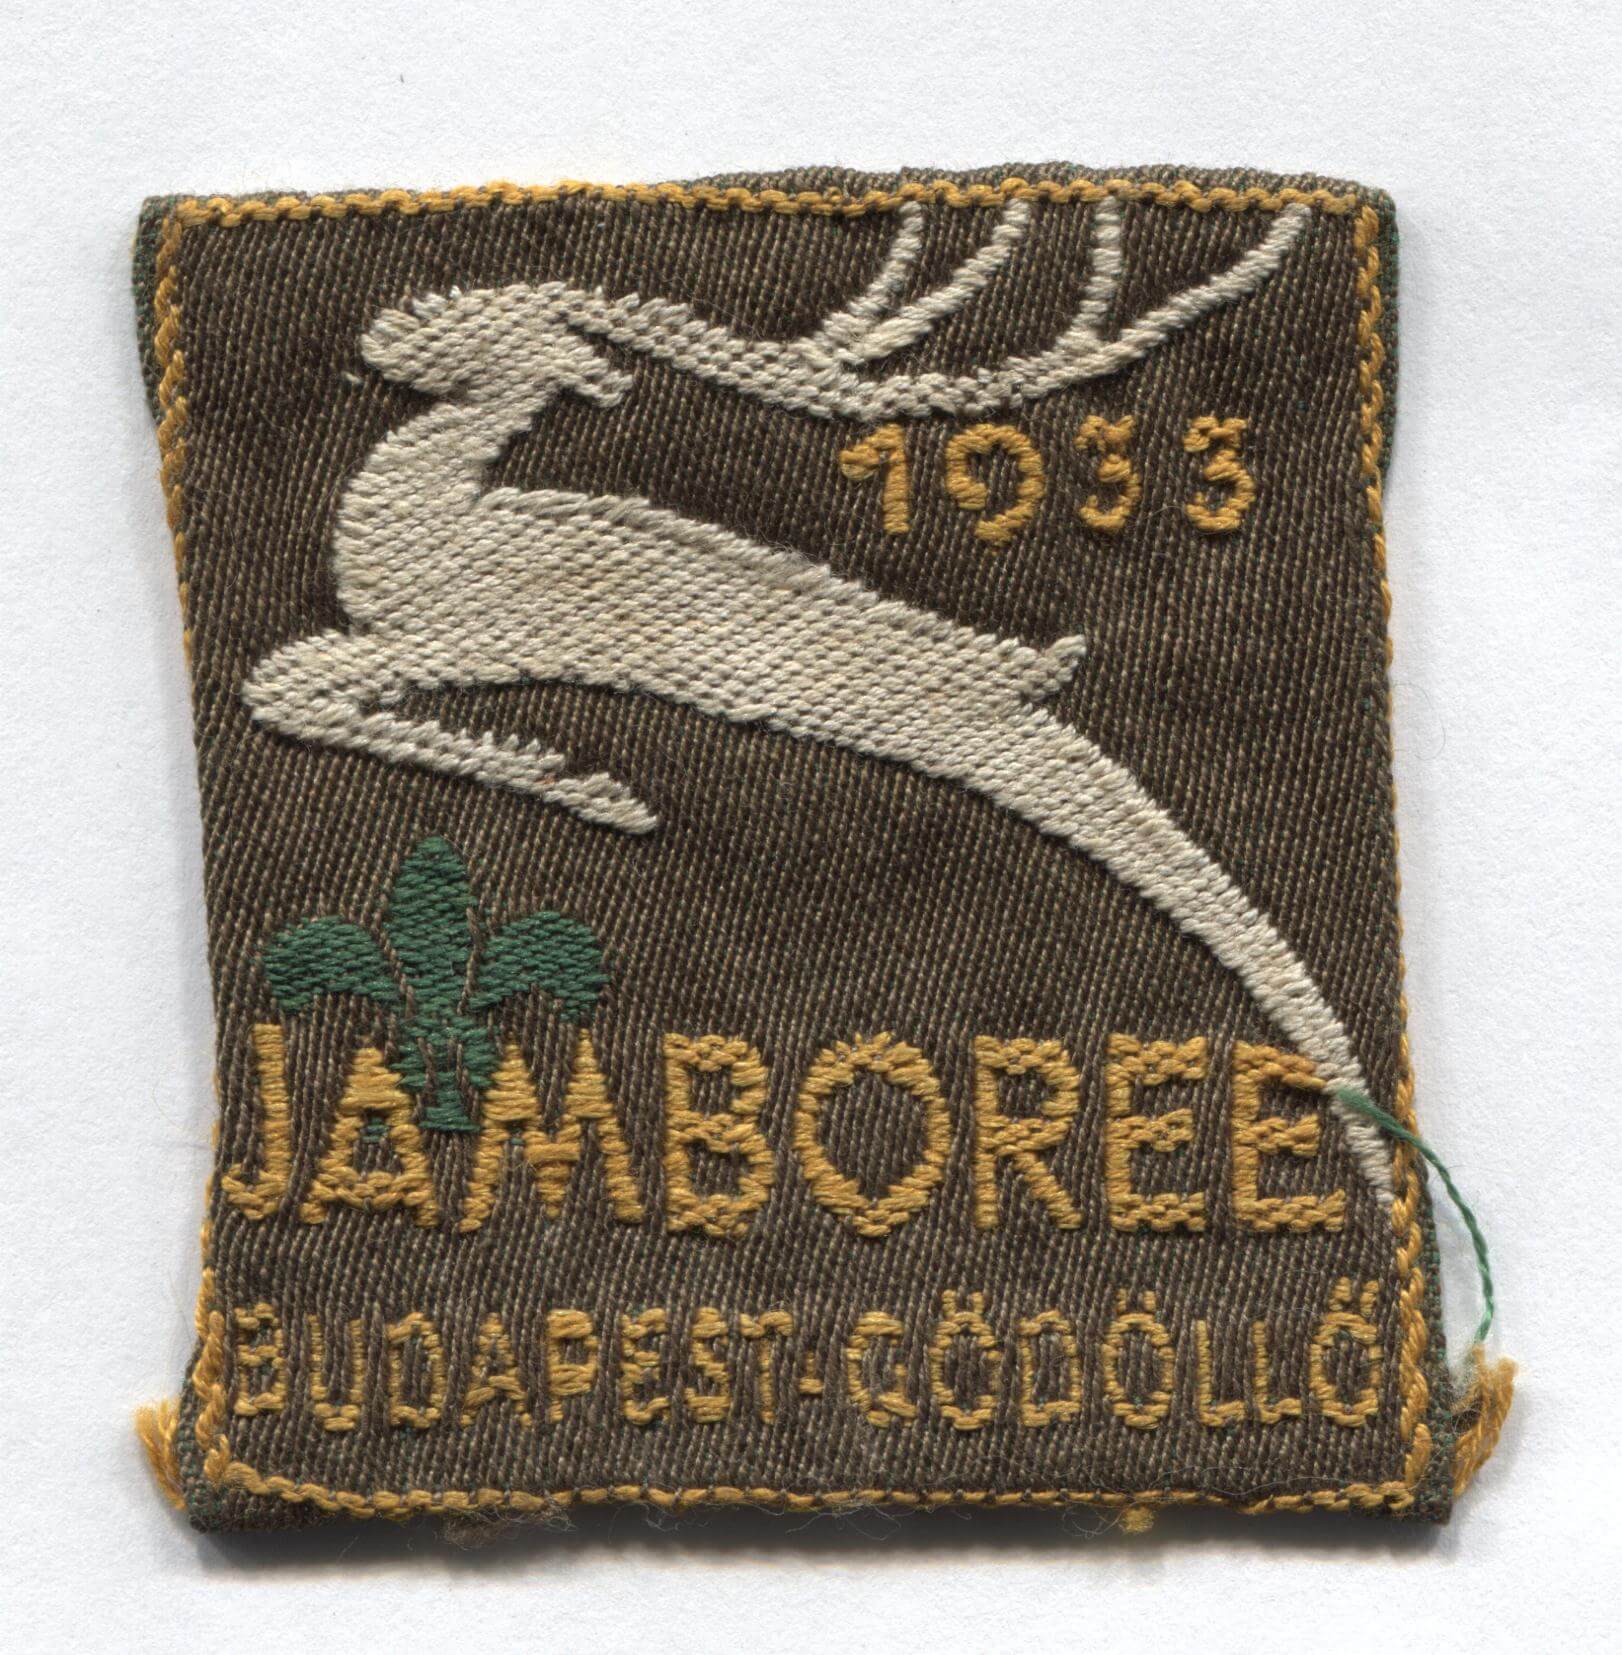 Jamboree badge of 1933